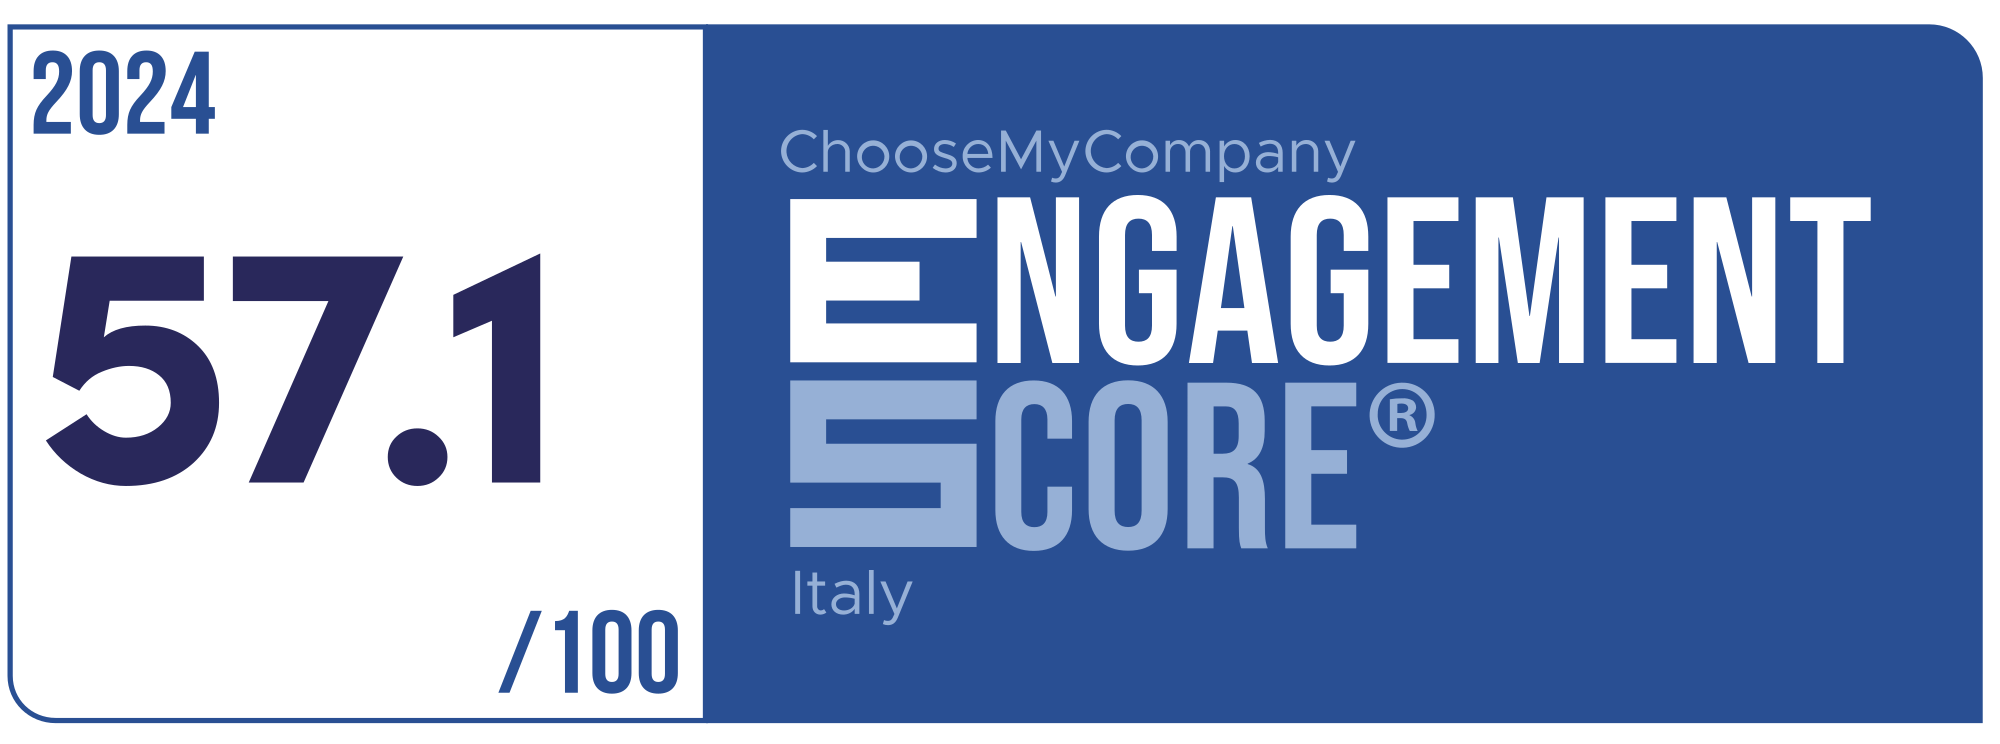 Label Engagement Score 2024 Italy